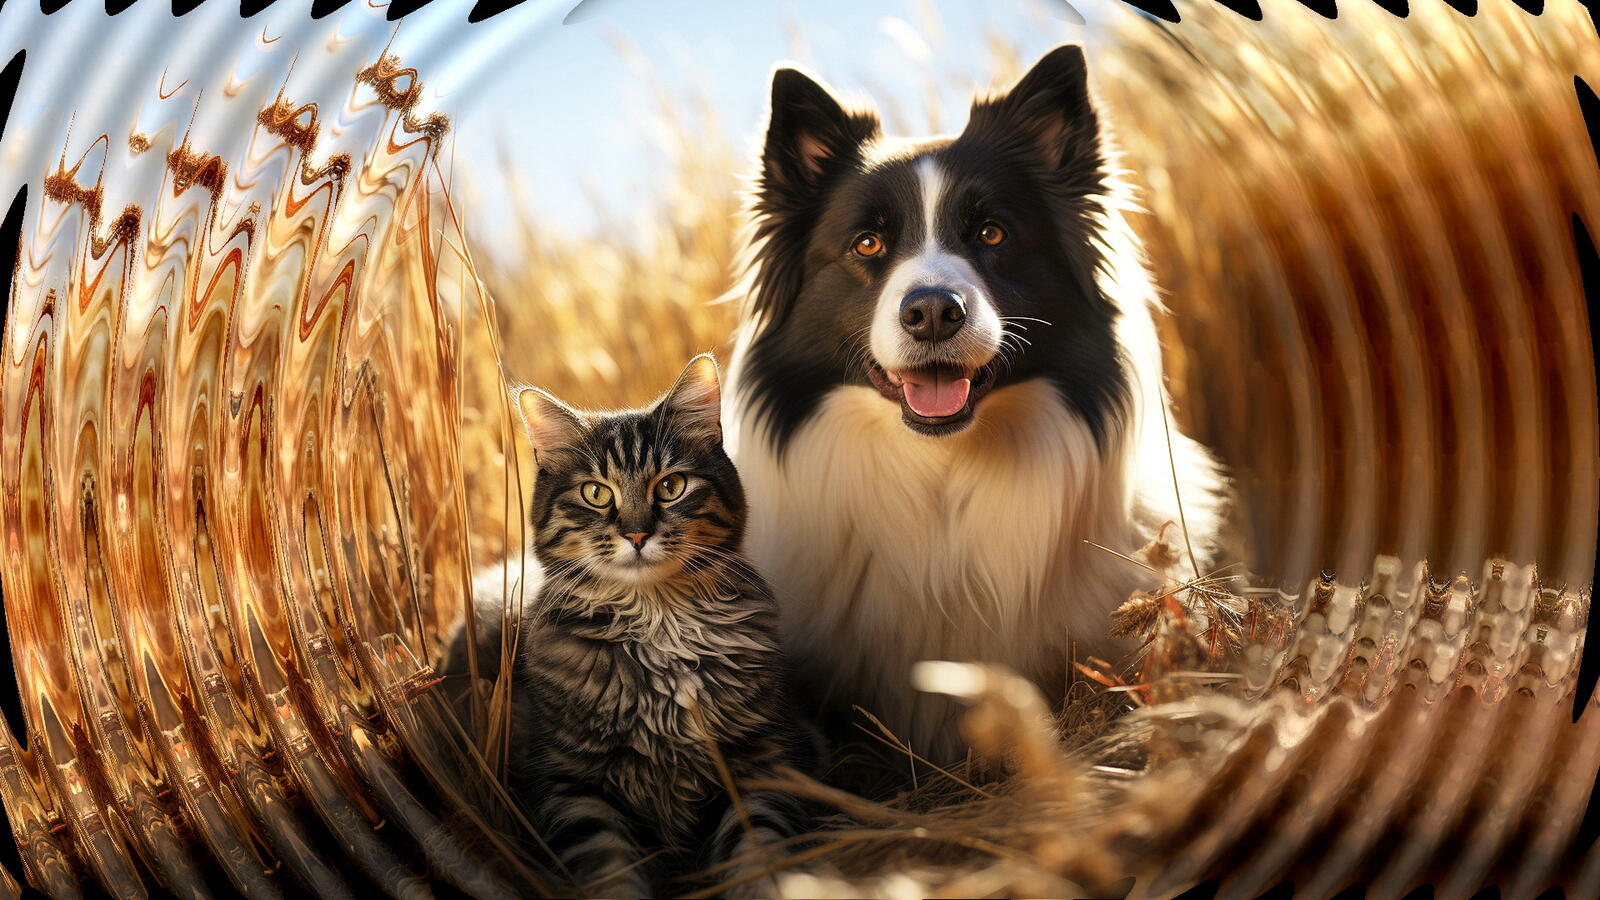 Бесплатное фото Кошка и собака в поле